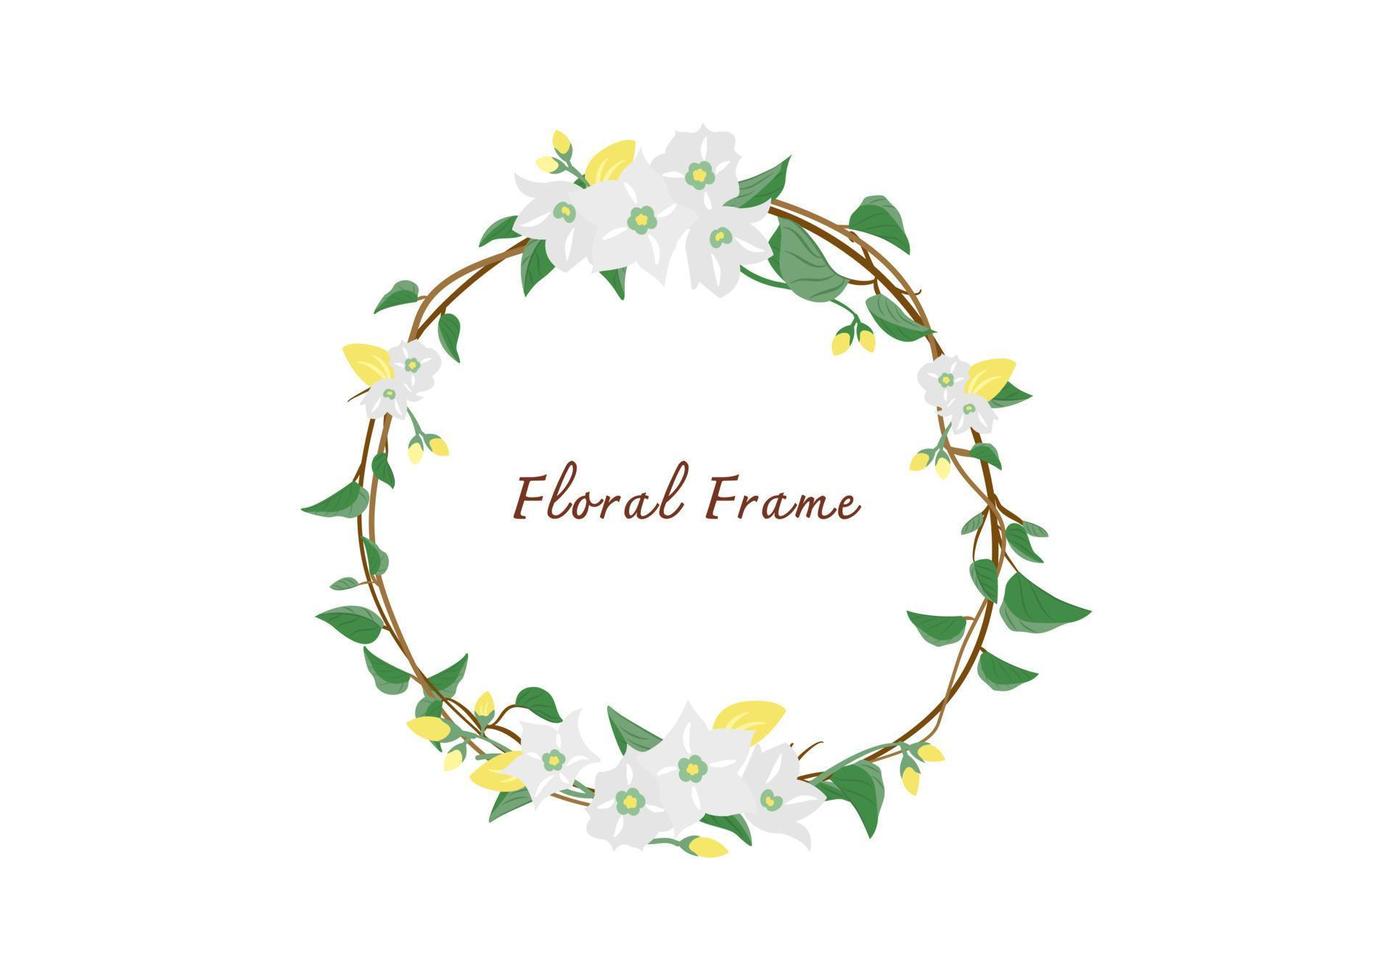 pan floreciente vallaris flor floral corona marco vector fondo